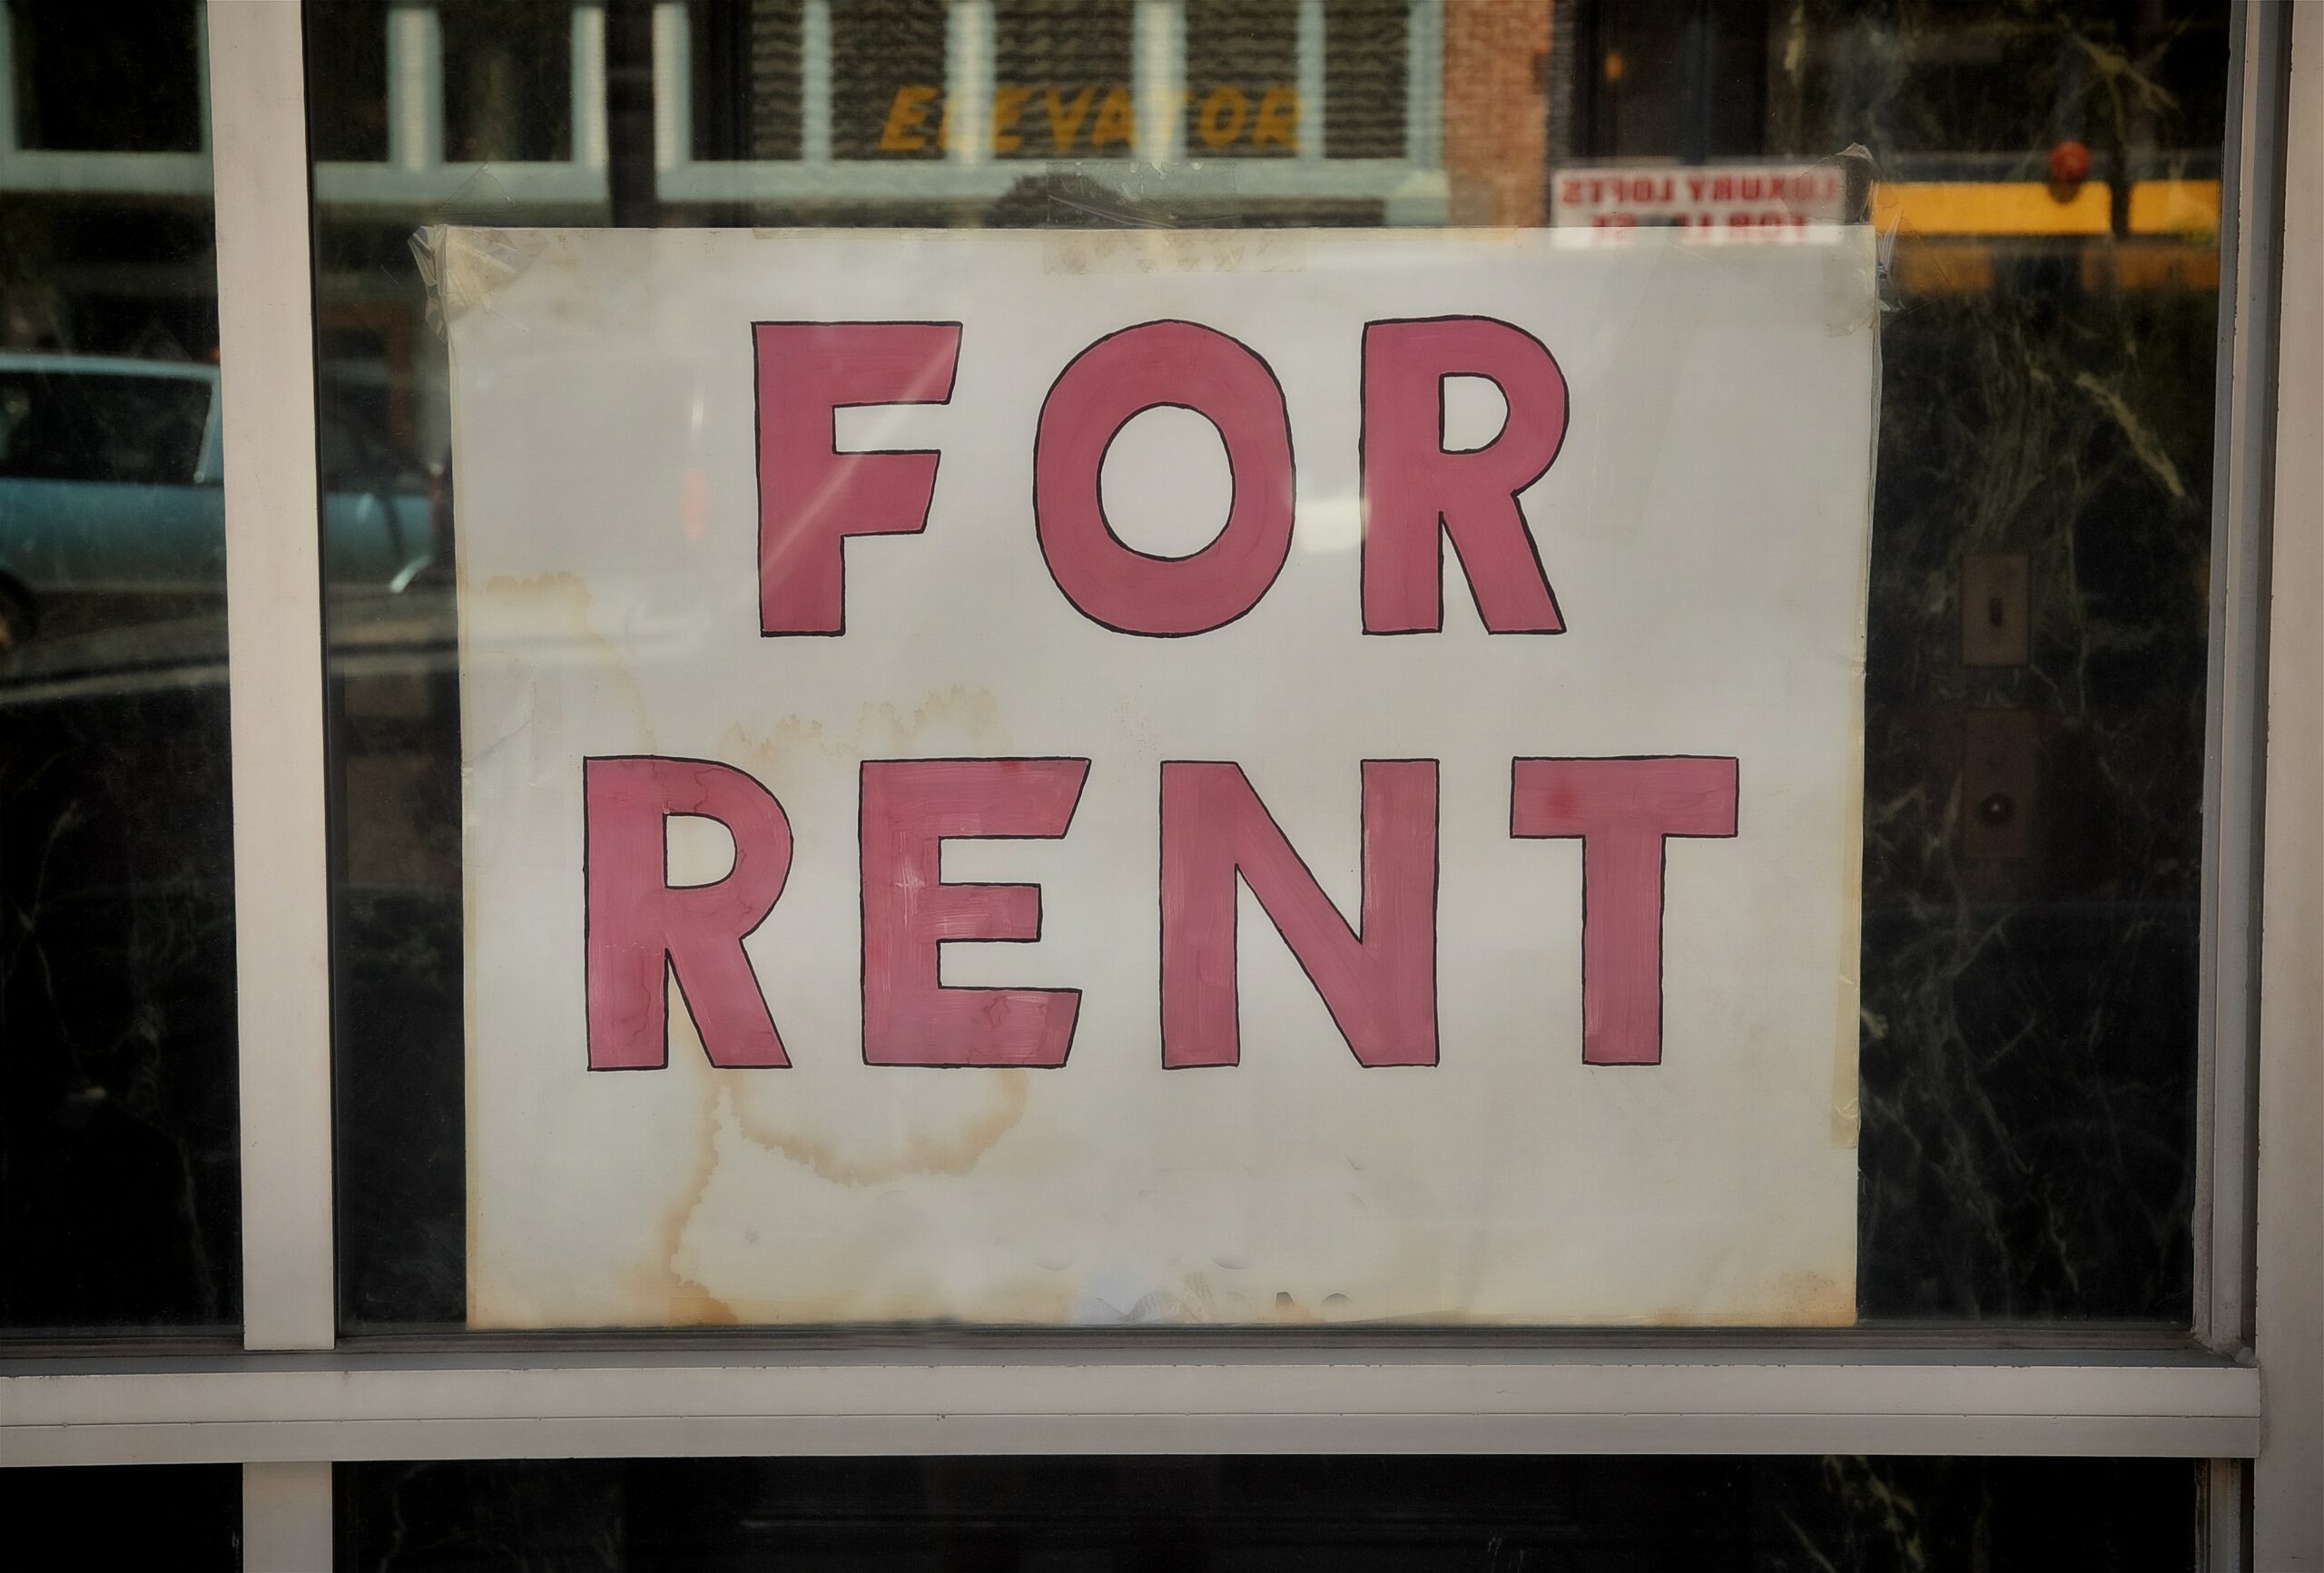 Boston Herald: Treat Landlords as Allies to Fight Housing Crisis